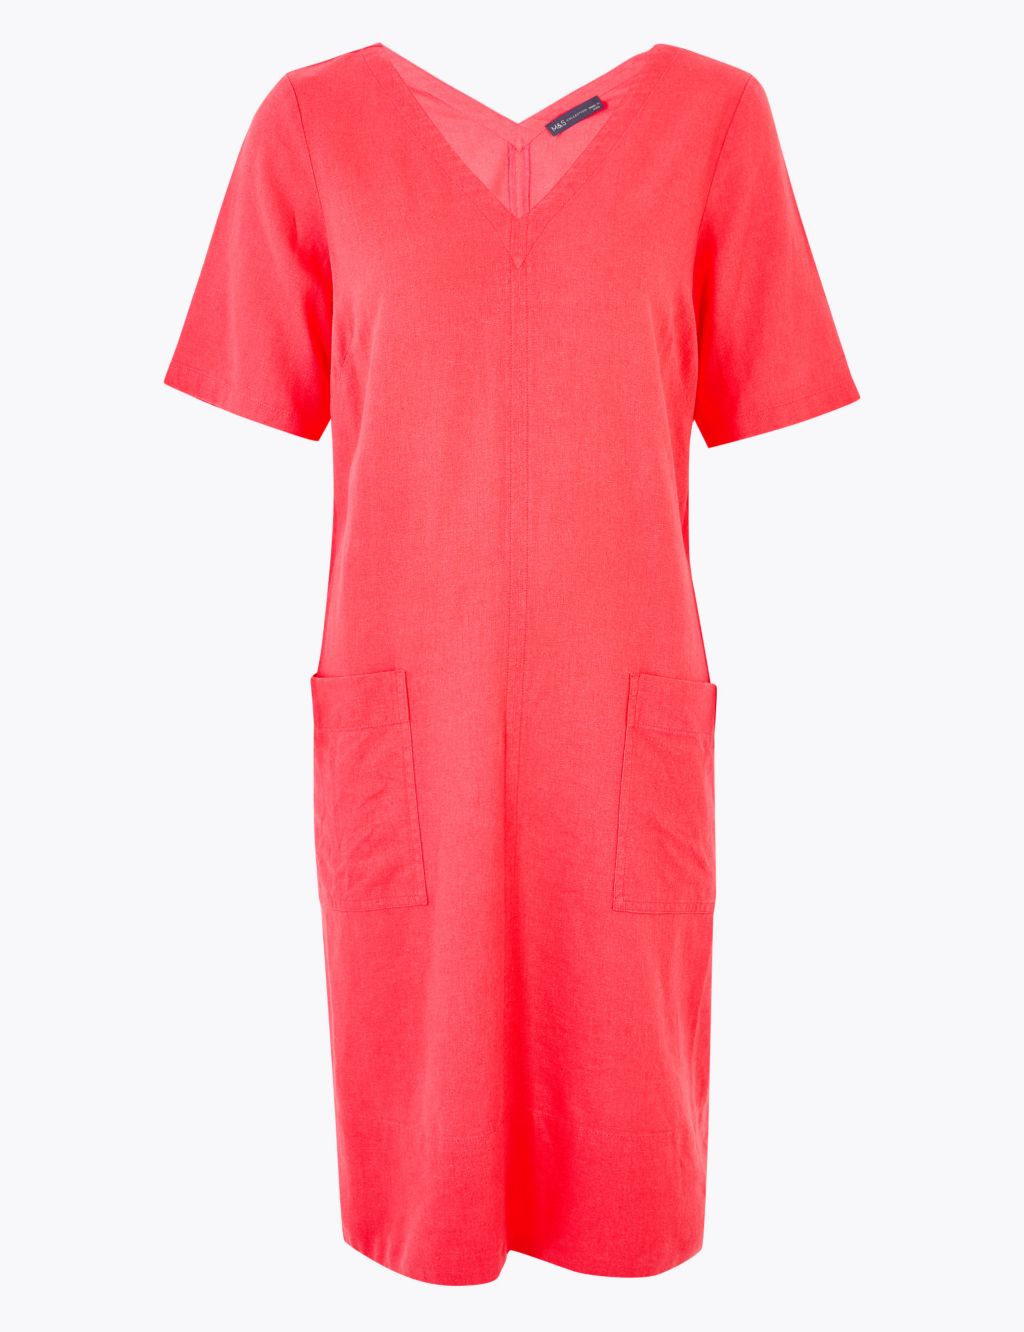 Linen blend V-Neck Shift Dress | M&S Collection | M&S